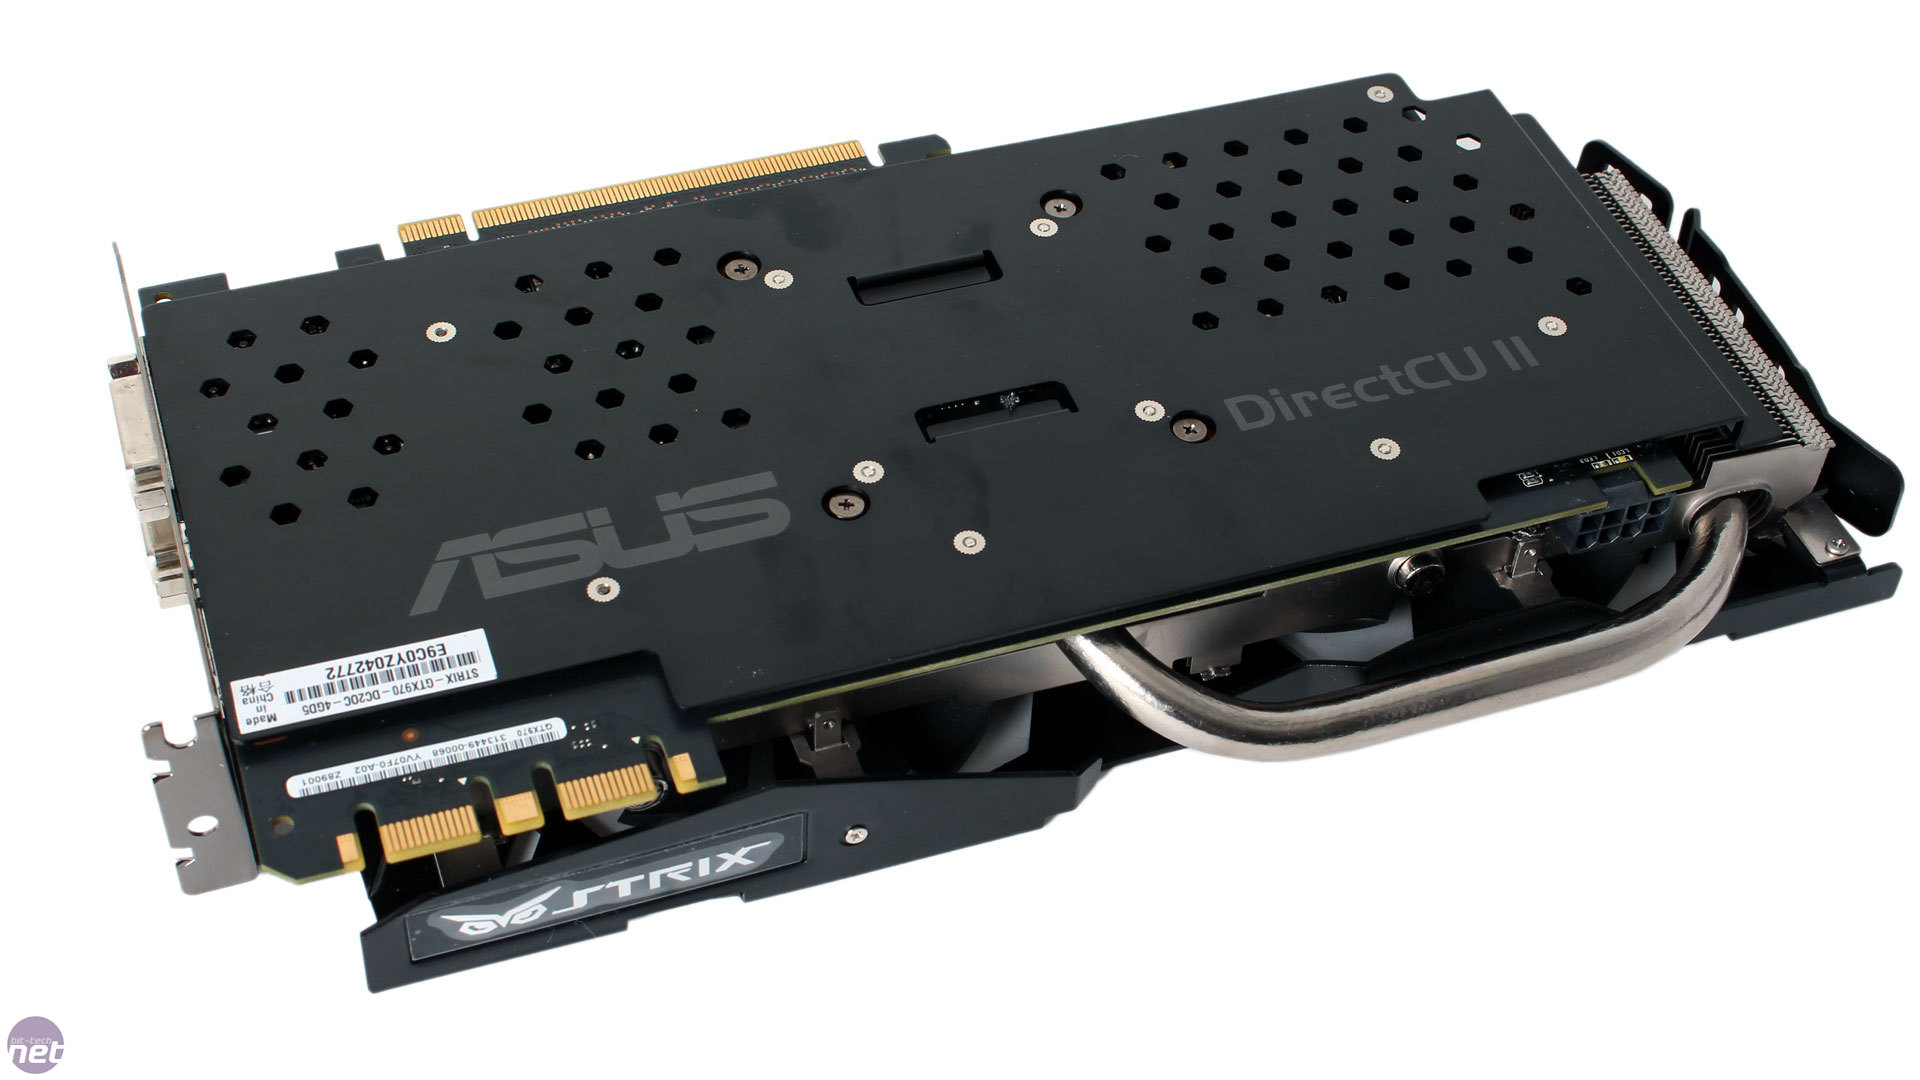 Nvidia GeForce GTX 970 Review Roundup: feat. ASUS, EVGA and MSI | bit